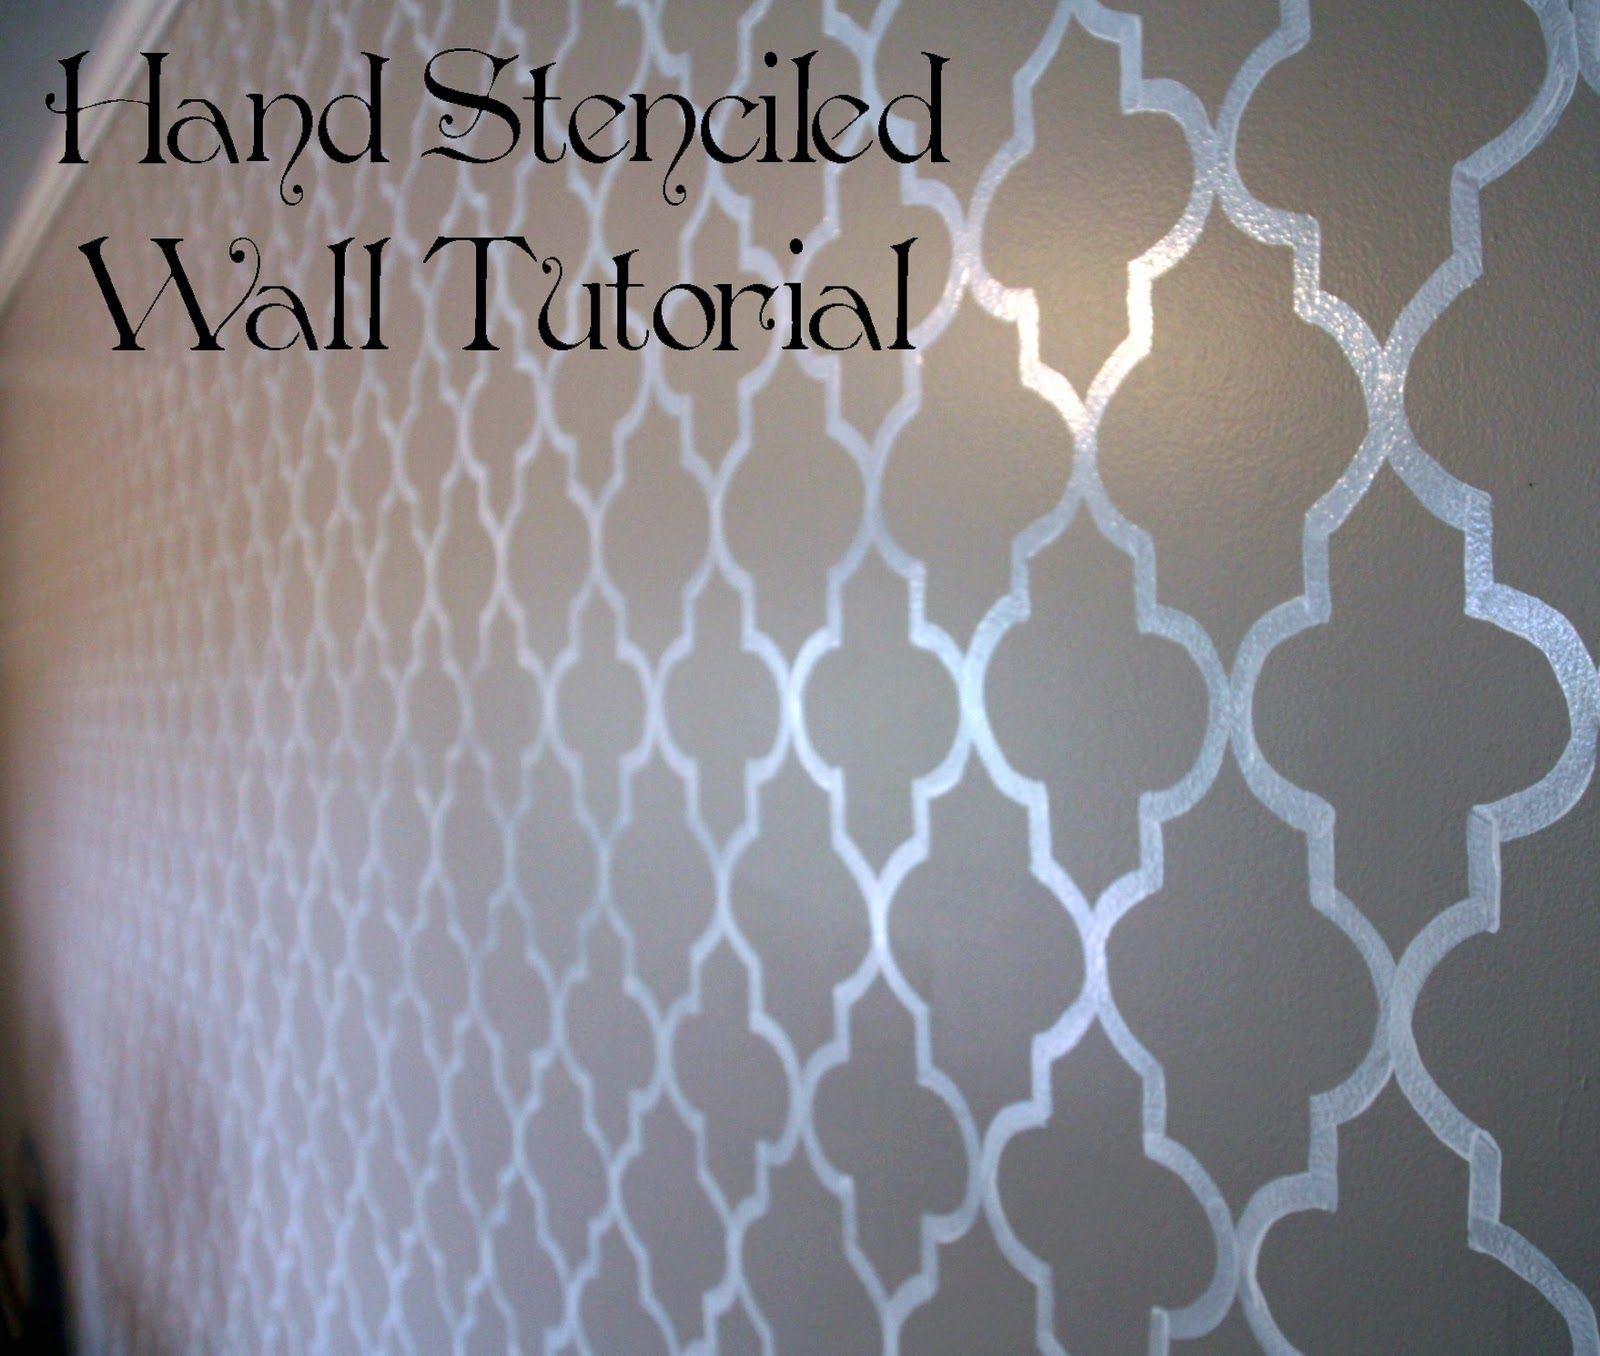 Free Wall Stencils | Wall Covering Ideas | Pinterest | Stencils - Free Printable Wall Stencils For Painting